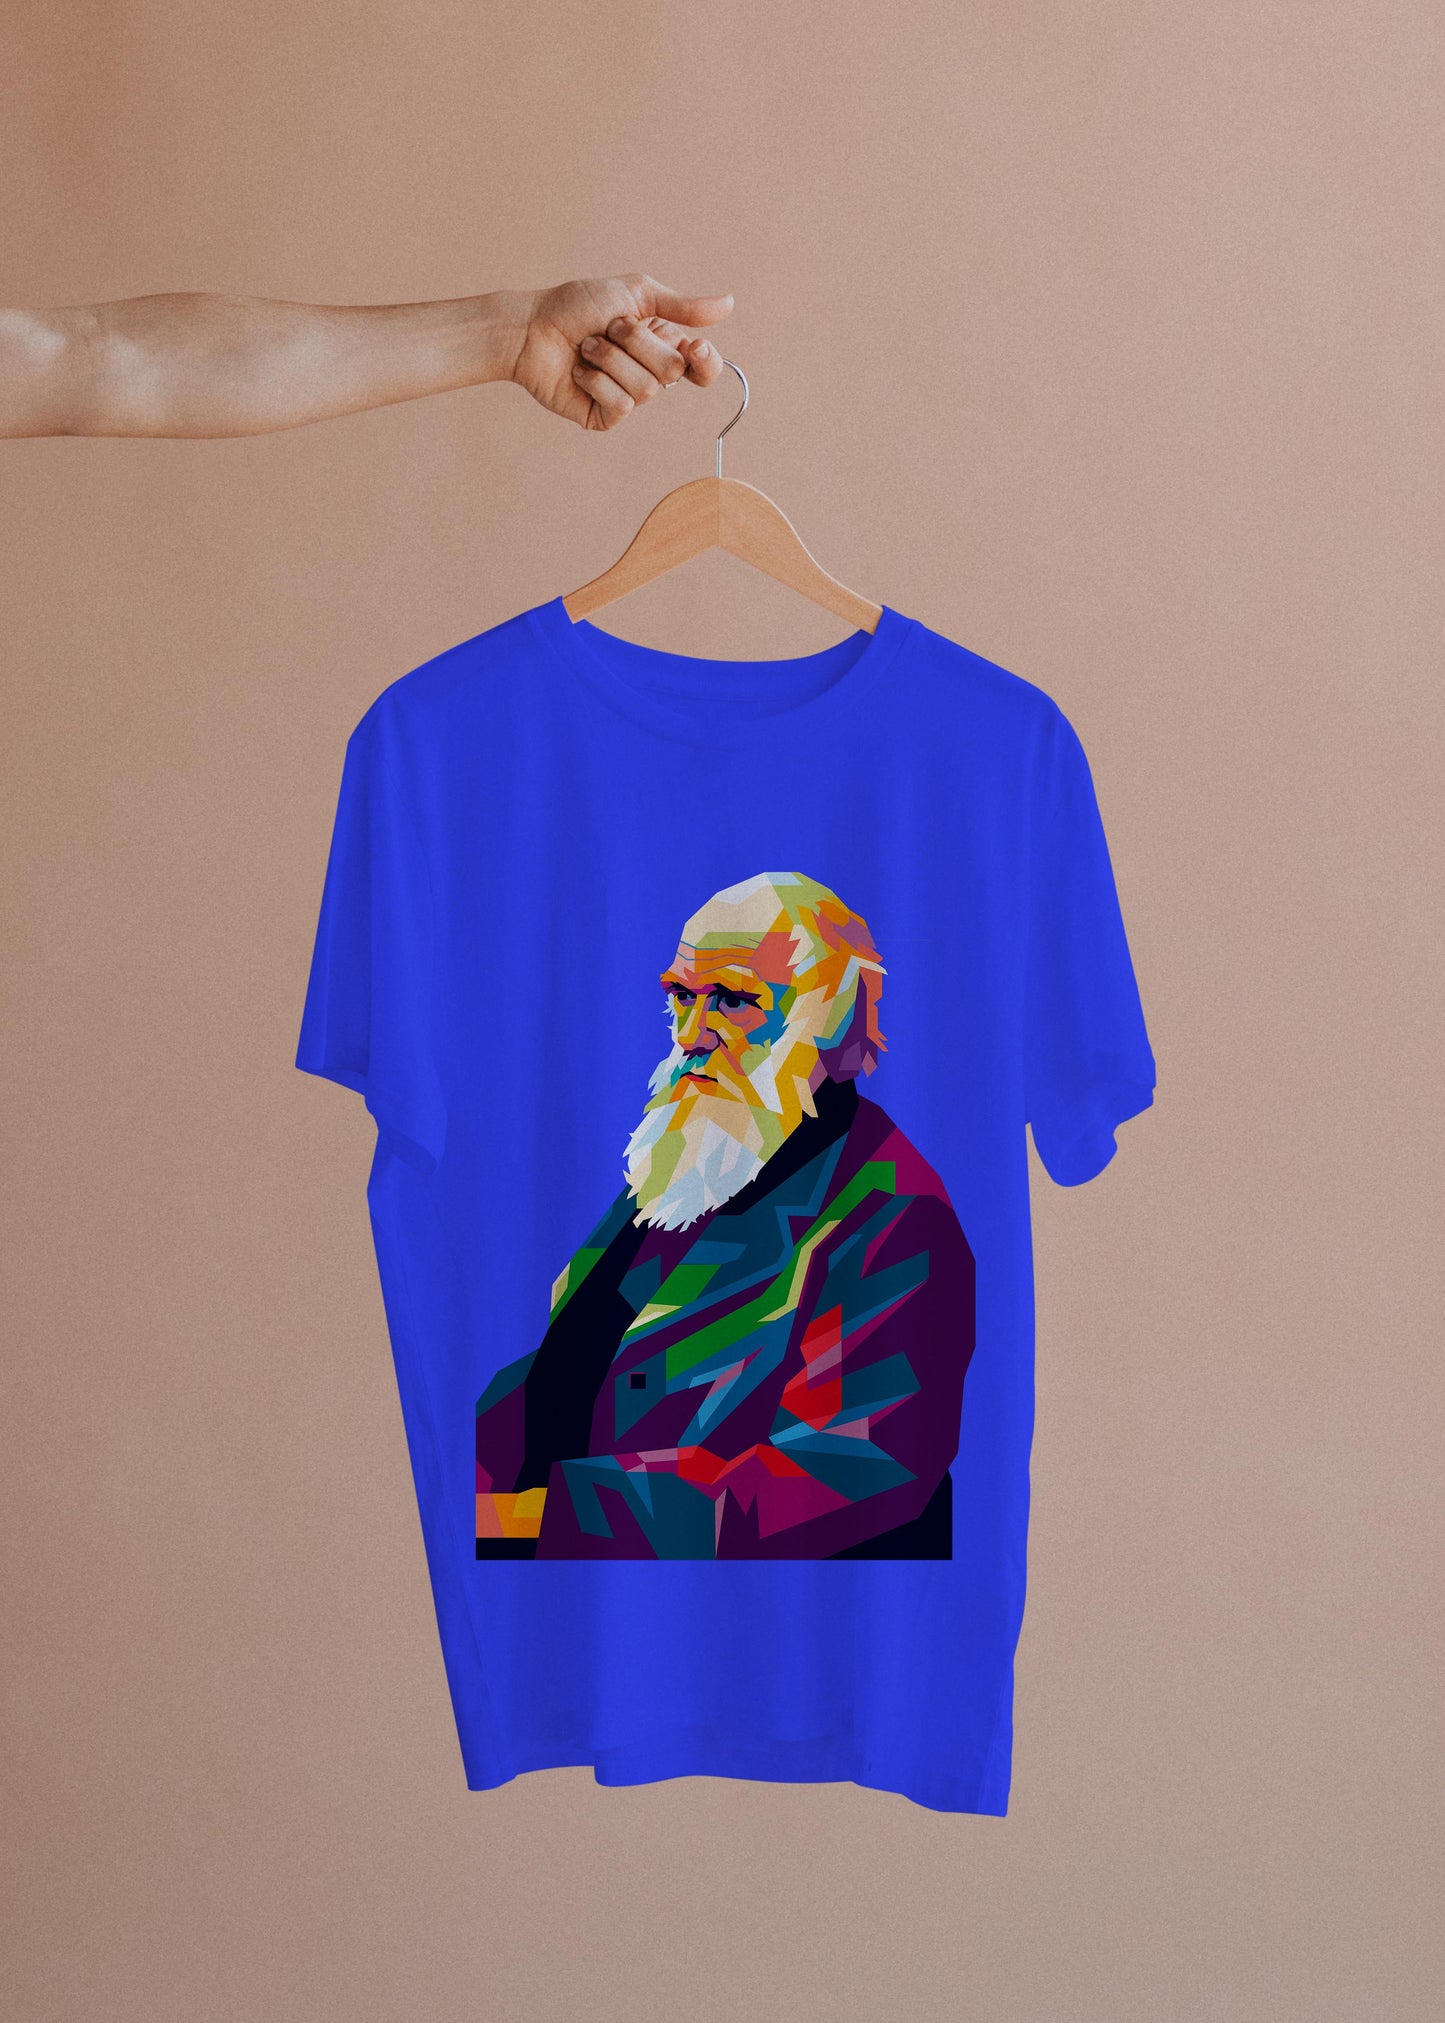 Camiseta Charles Darwin - PopArt - Masculino -camiseta azul - Editora Datum